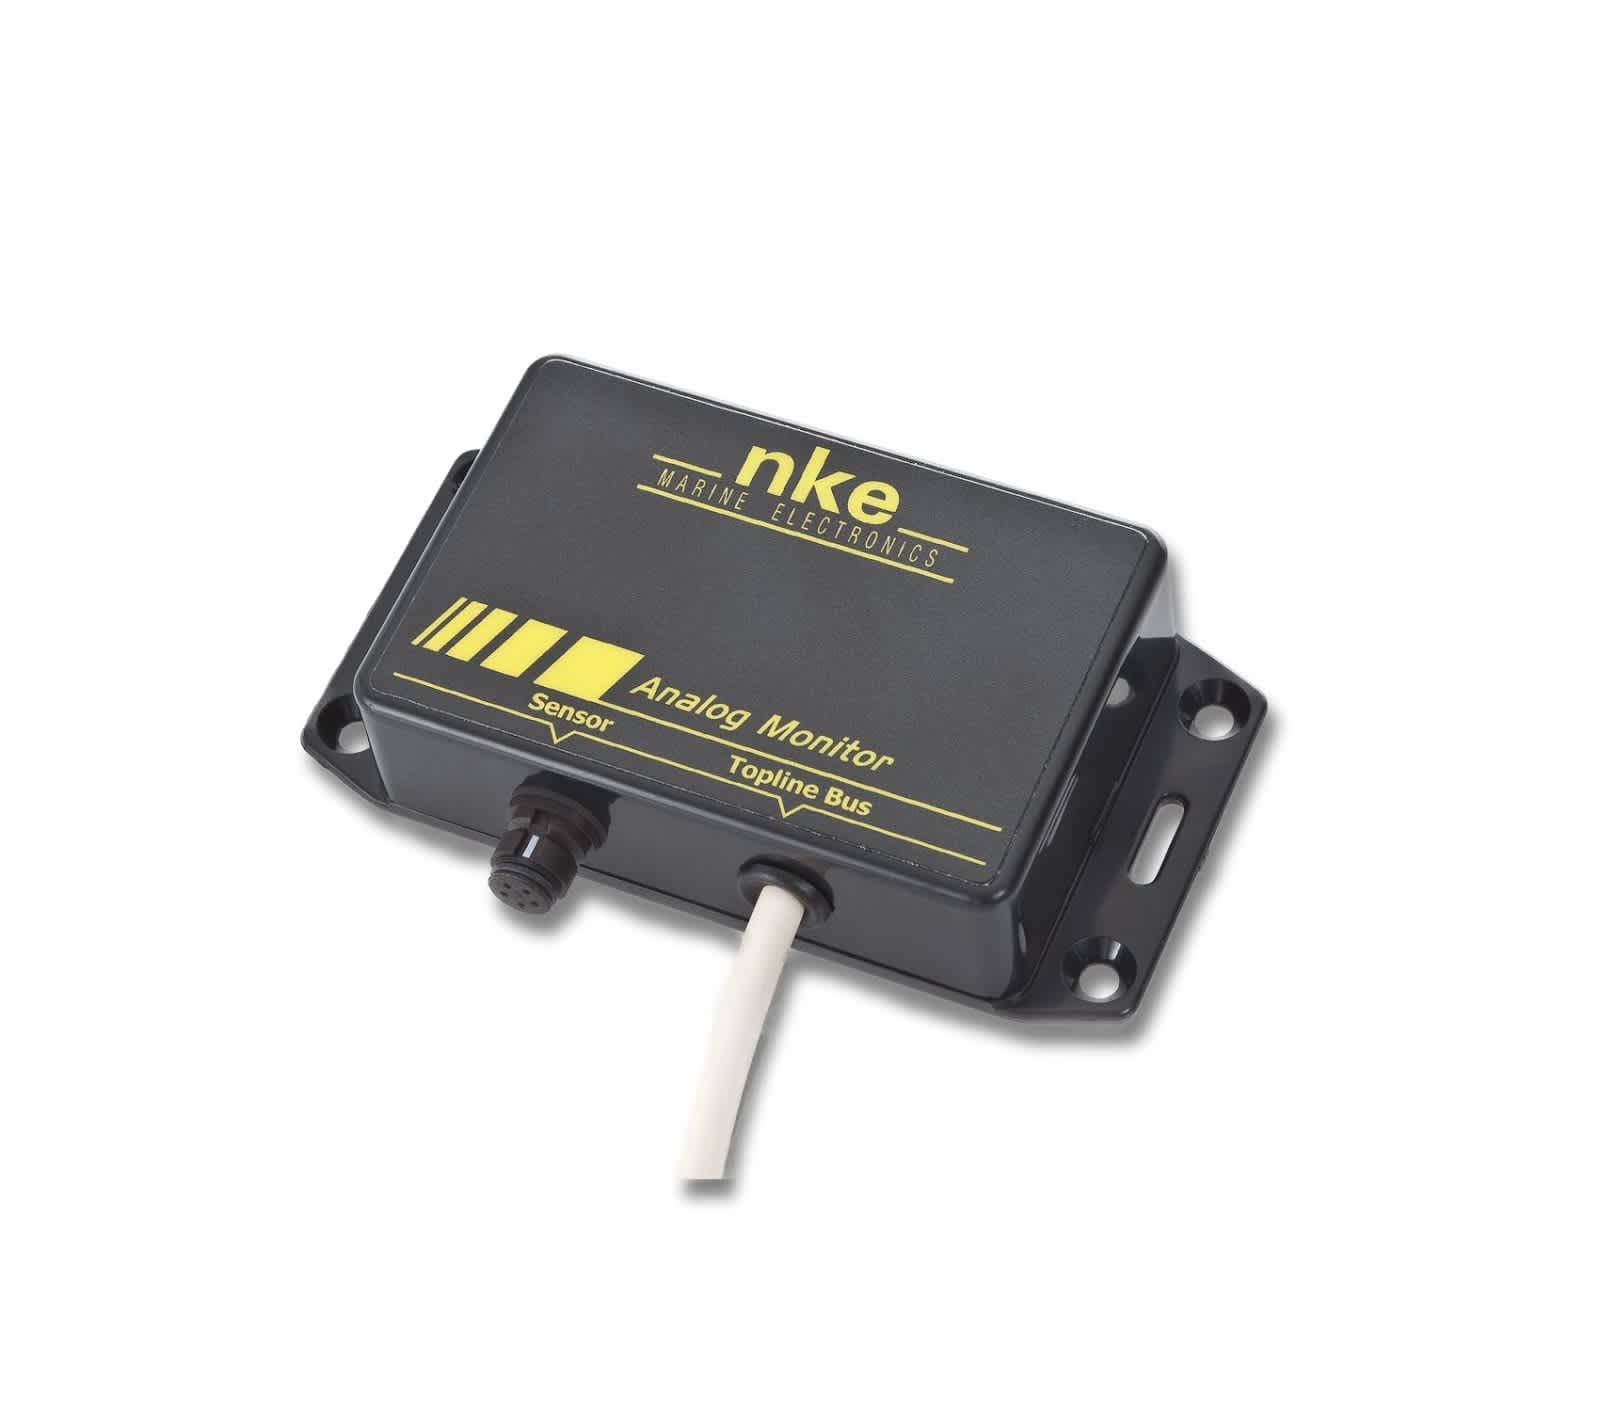 An NKE monitor box for interfacing with analog sensors.